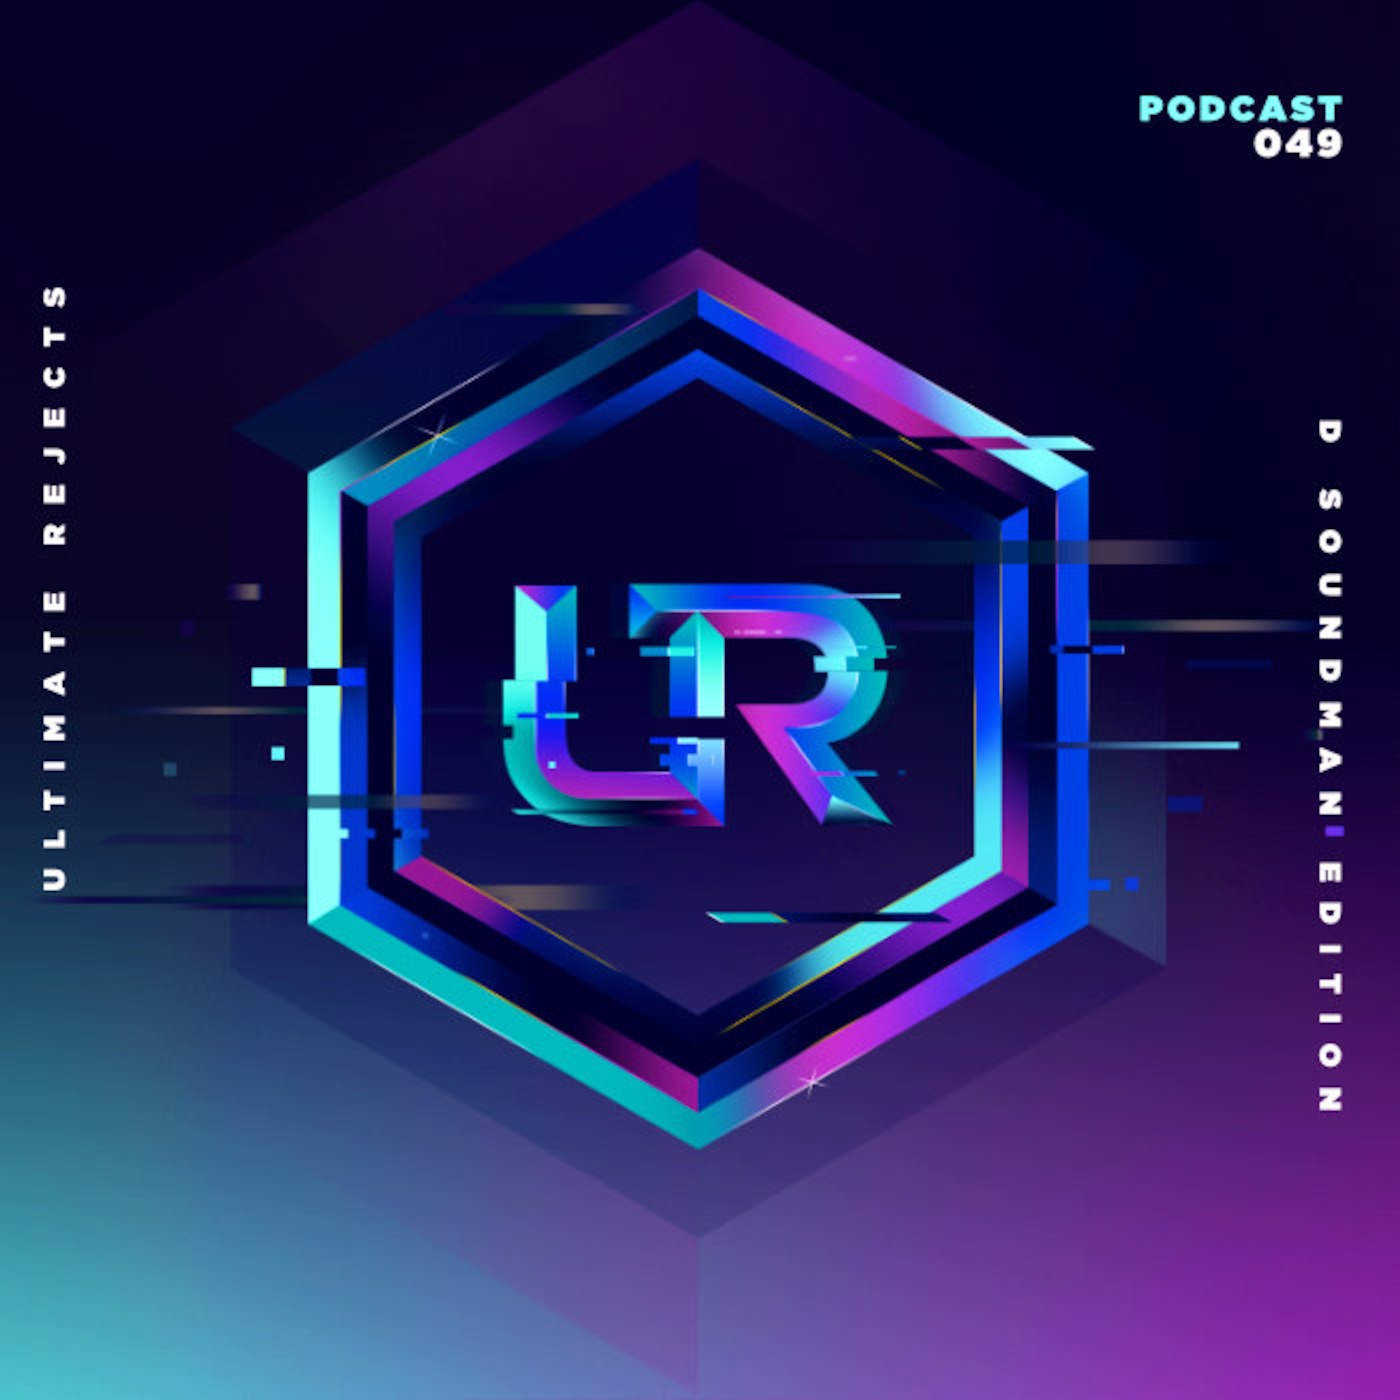 Ultimate Rejects UR Podcast 049 (D Soundman Edition)